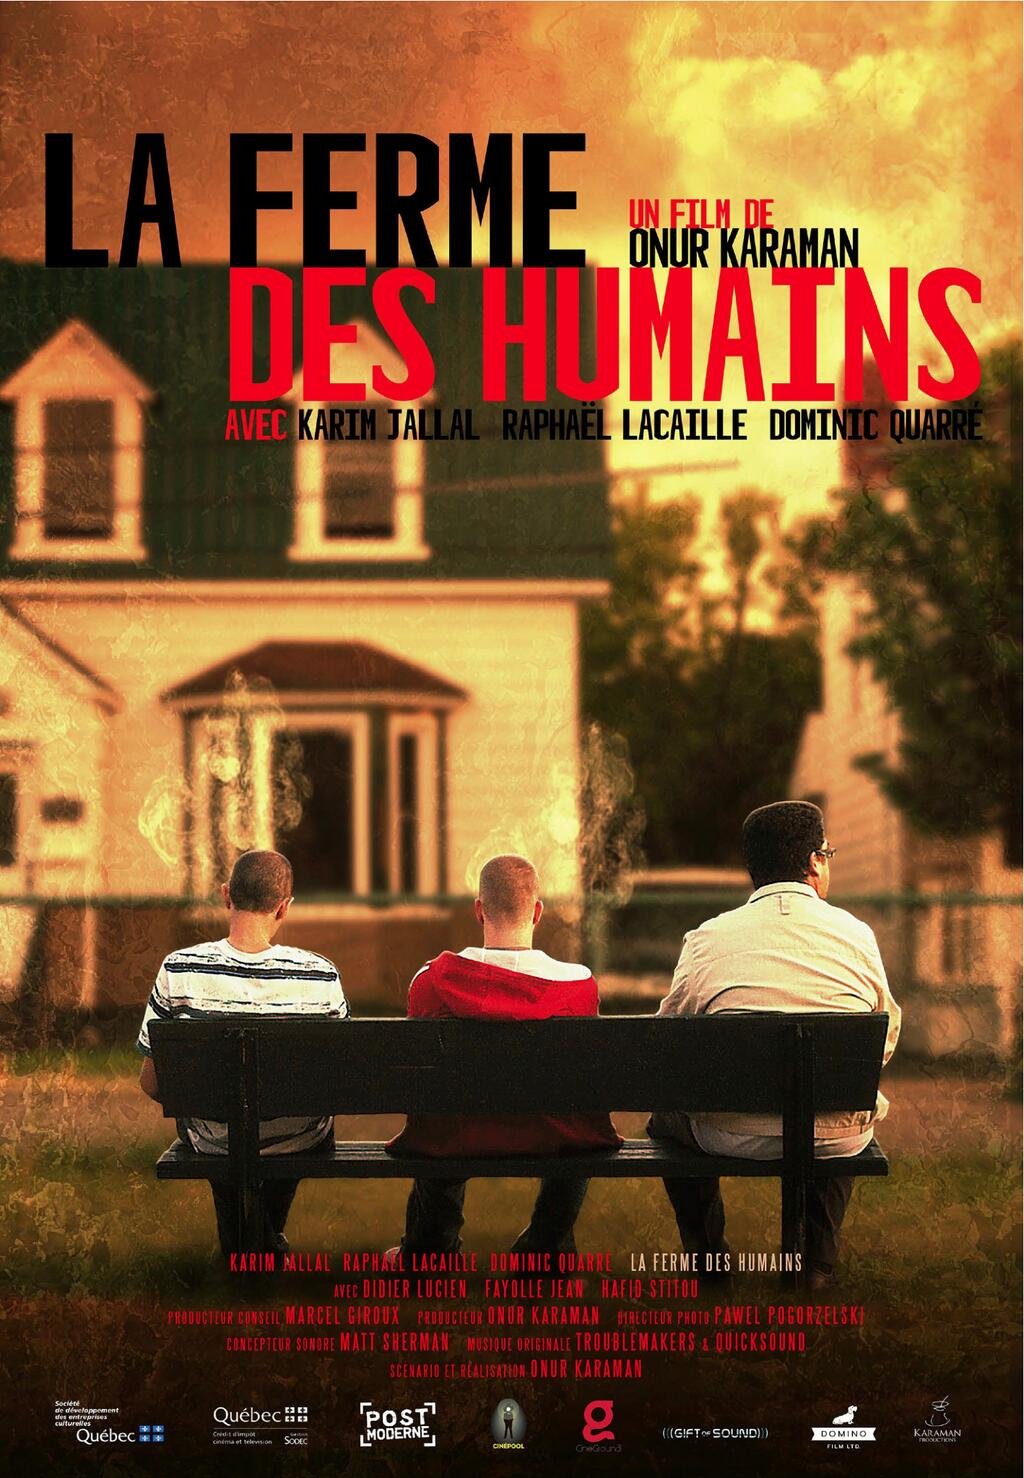 Poster of the movie La Ferme des humains